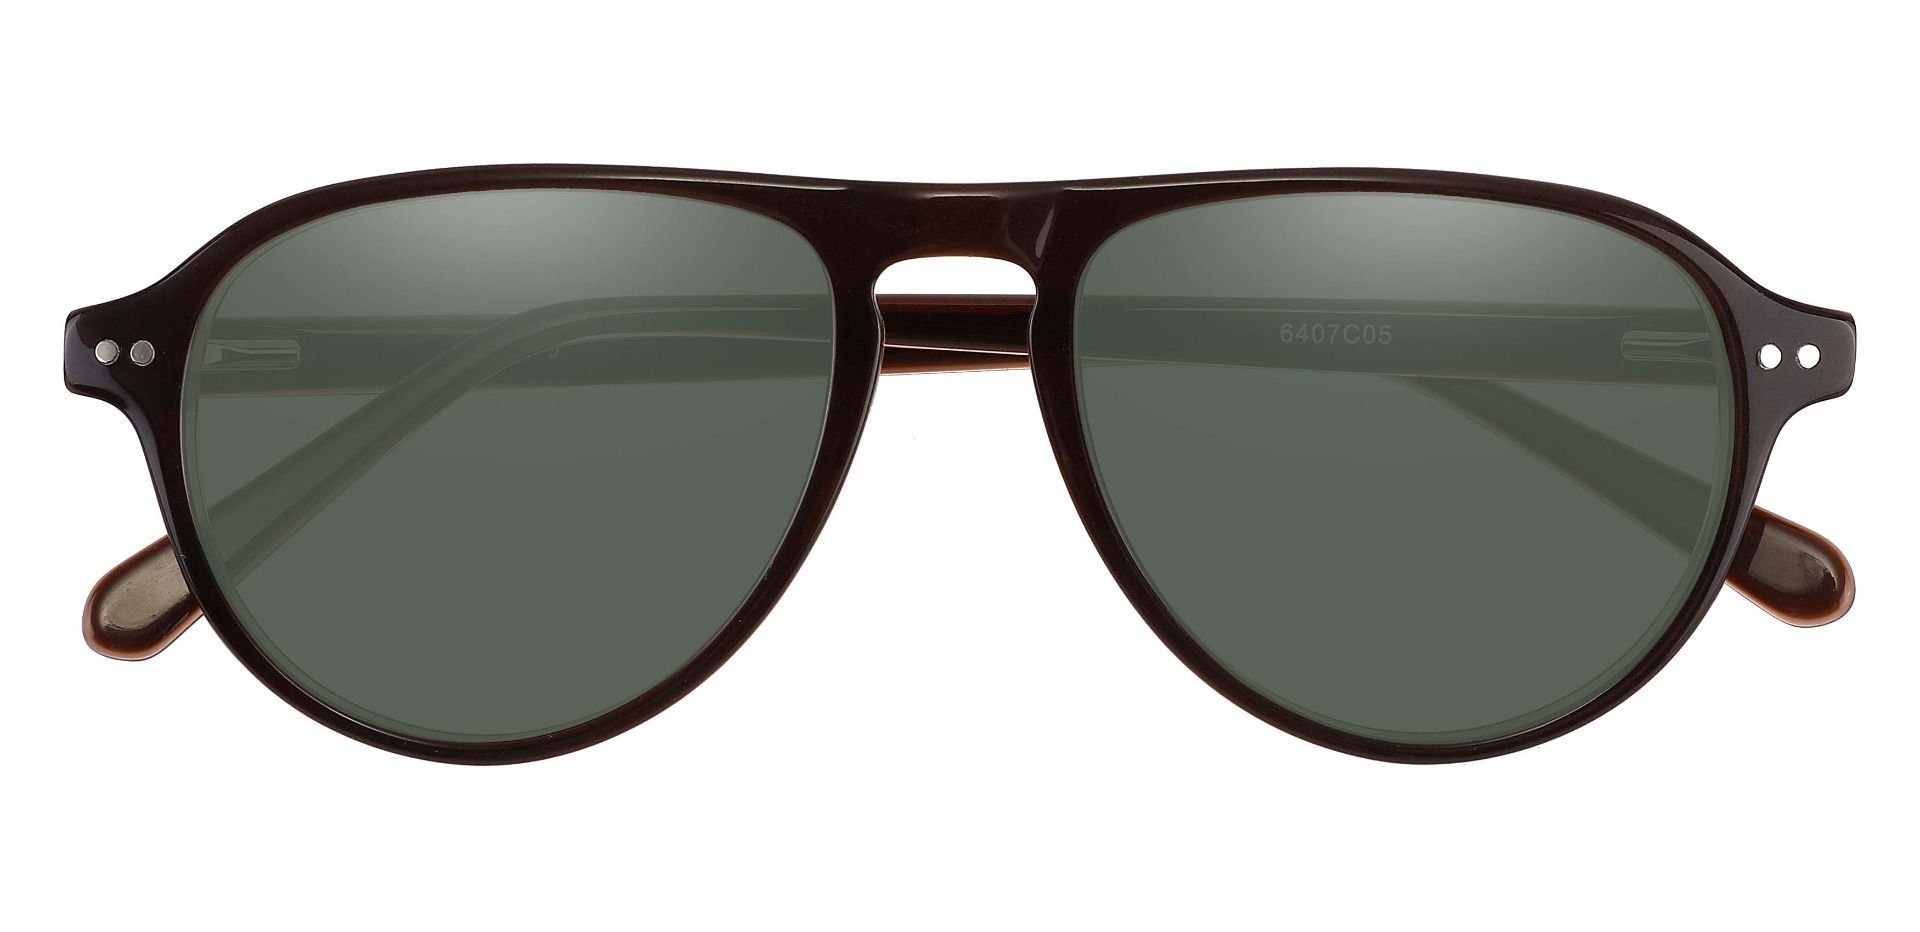 Durham Aviator Reading Sunglasses - Brown Frame With Green Lenses